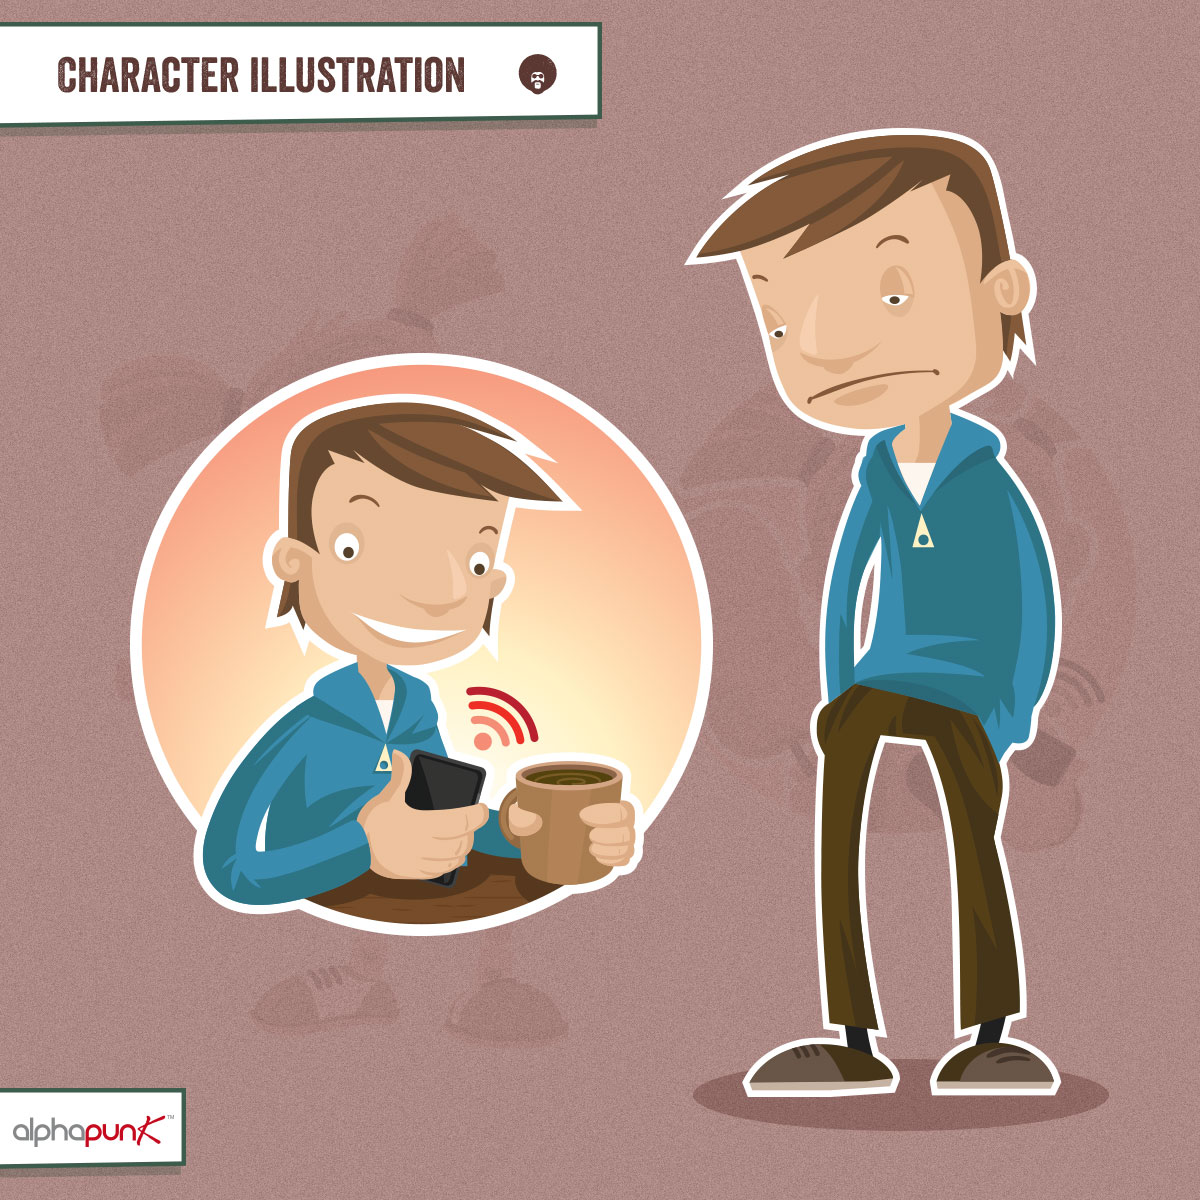 Character Design - Cartoon man with coffee